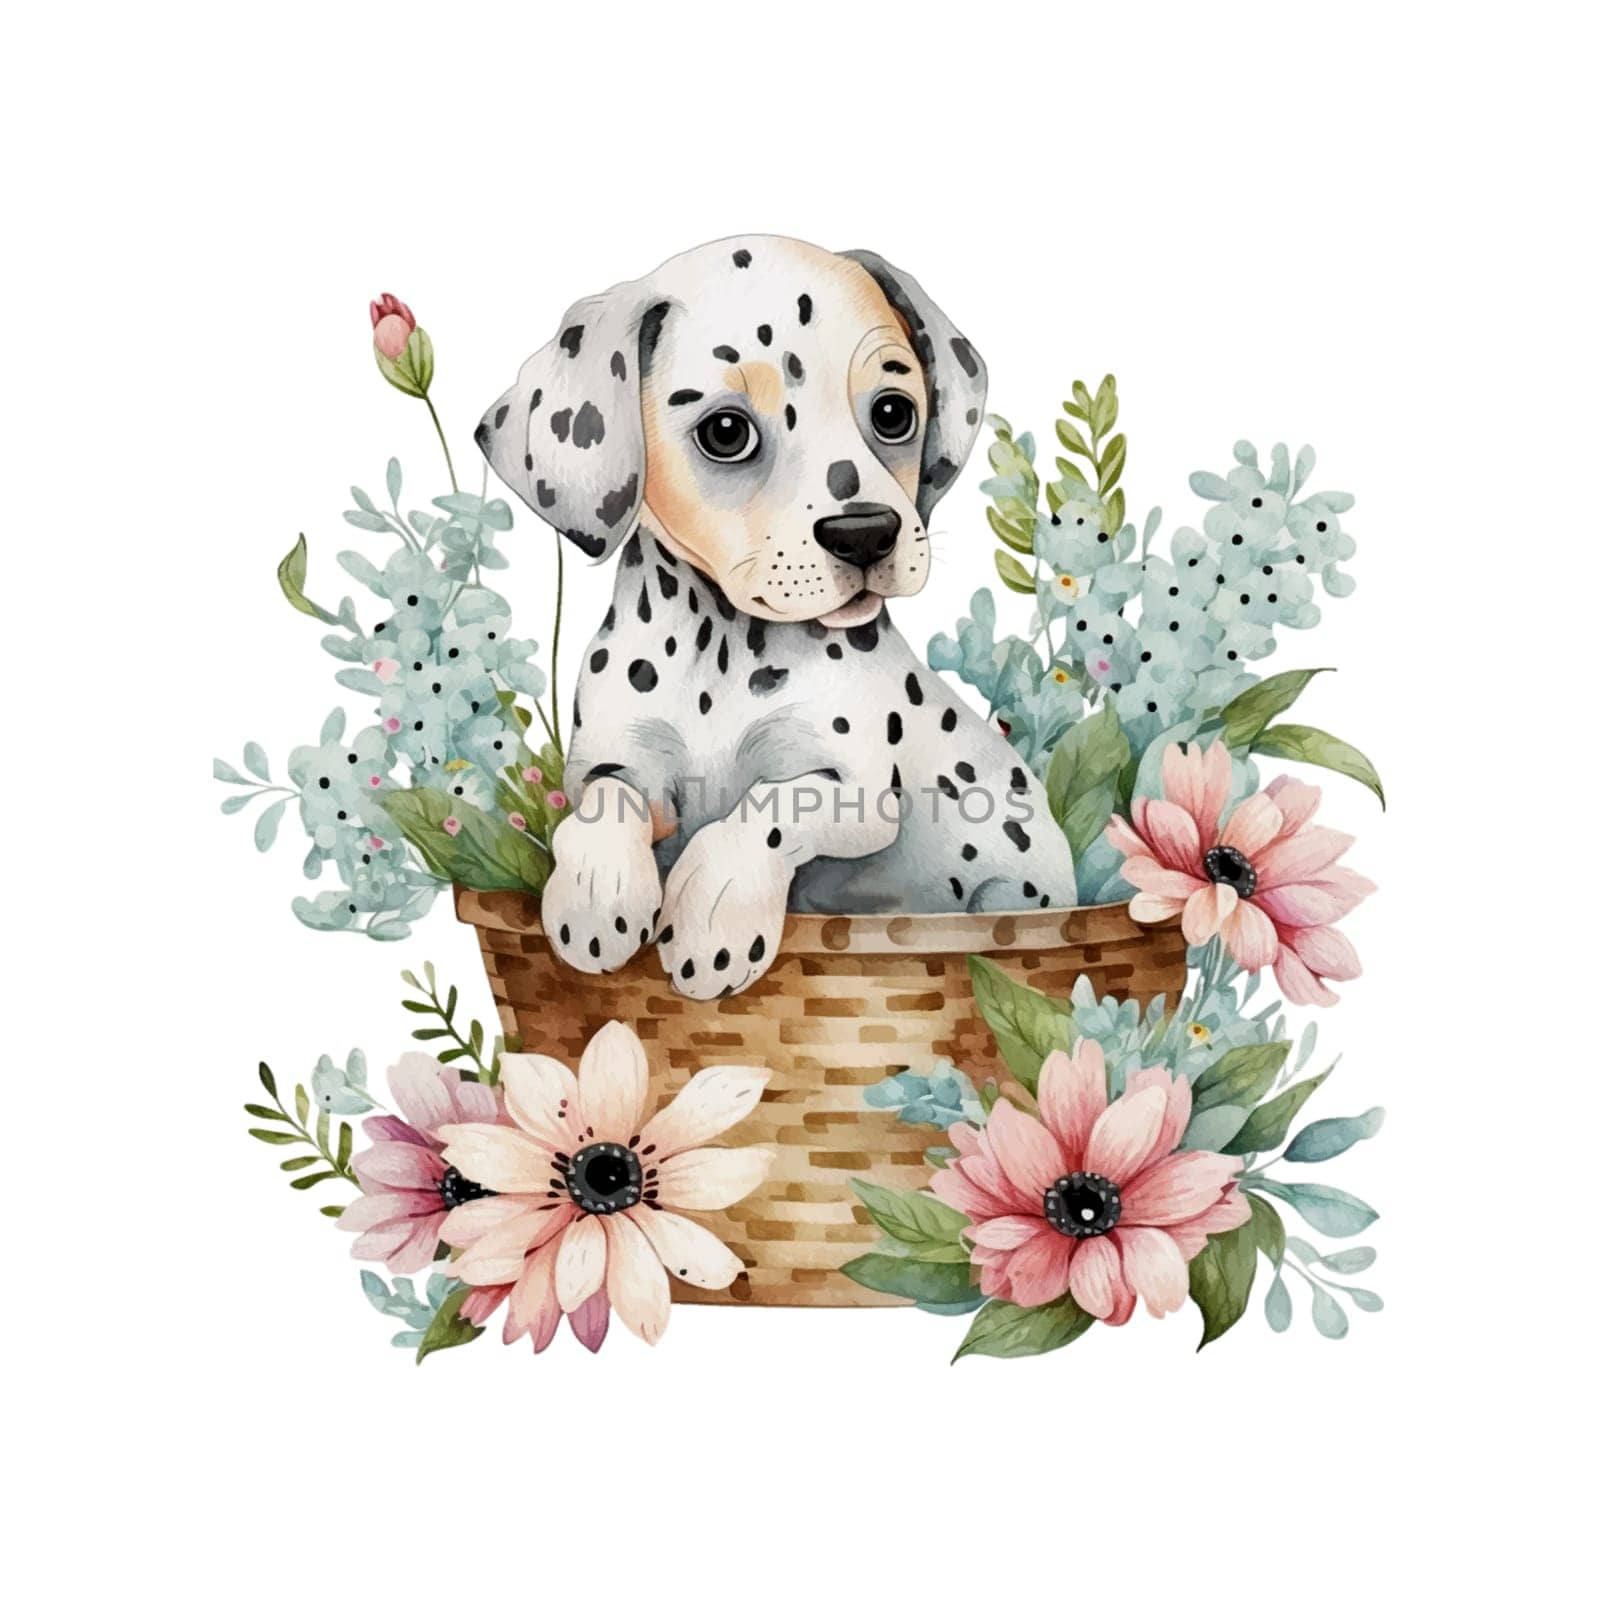 Baby Dalmatian Puppy in Flower Basket. Cute puppy in basket watercolor illustration. by Skyecreativestudio